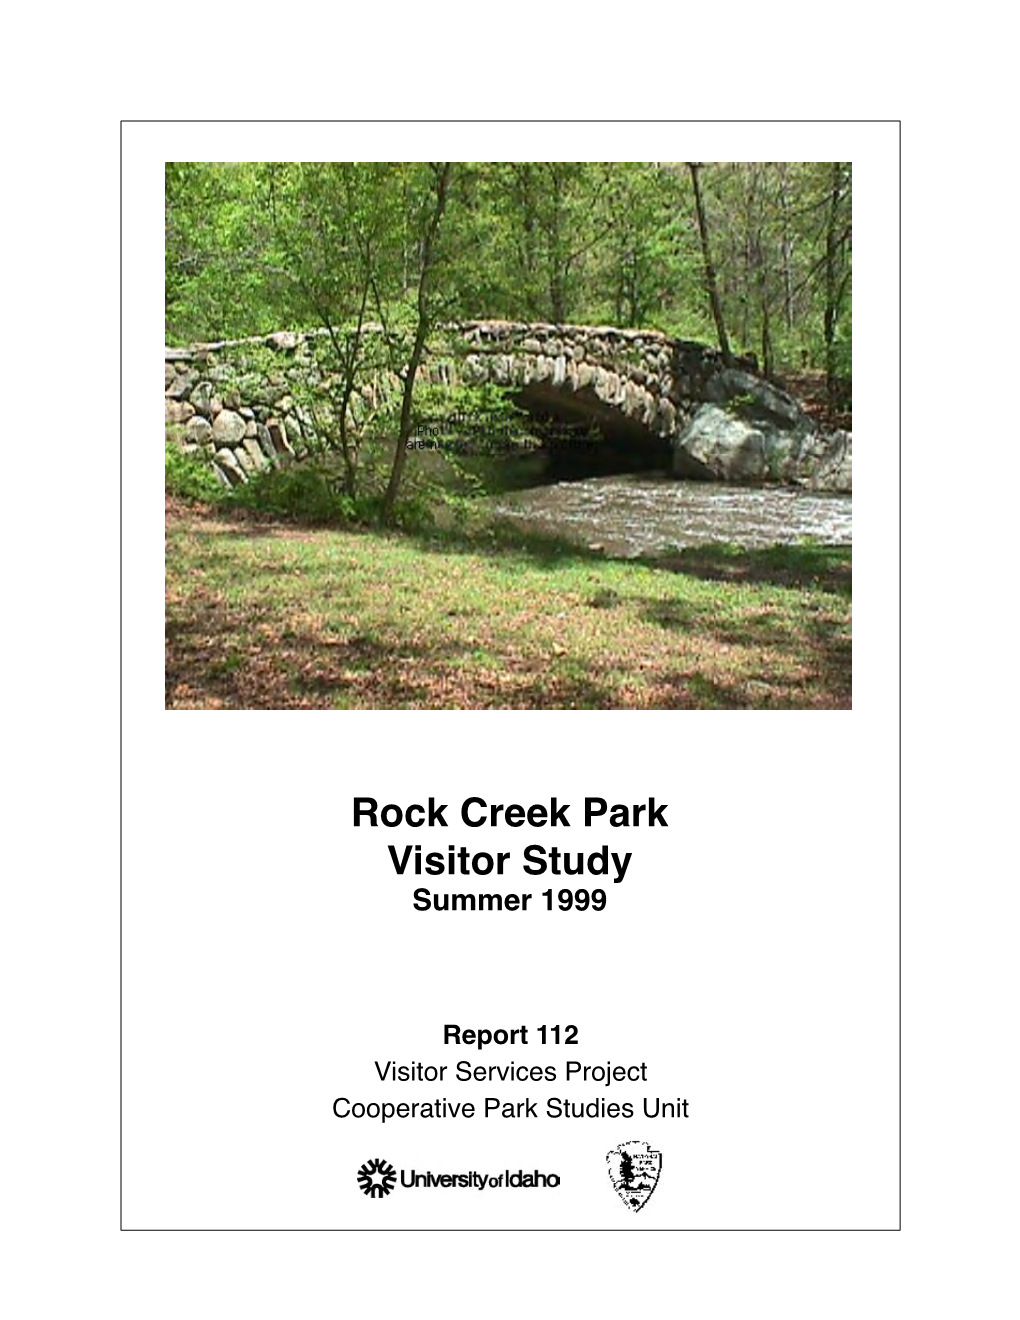 Rock Creek Park Visitor Study Summer 1999